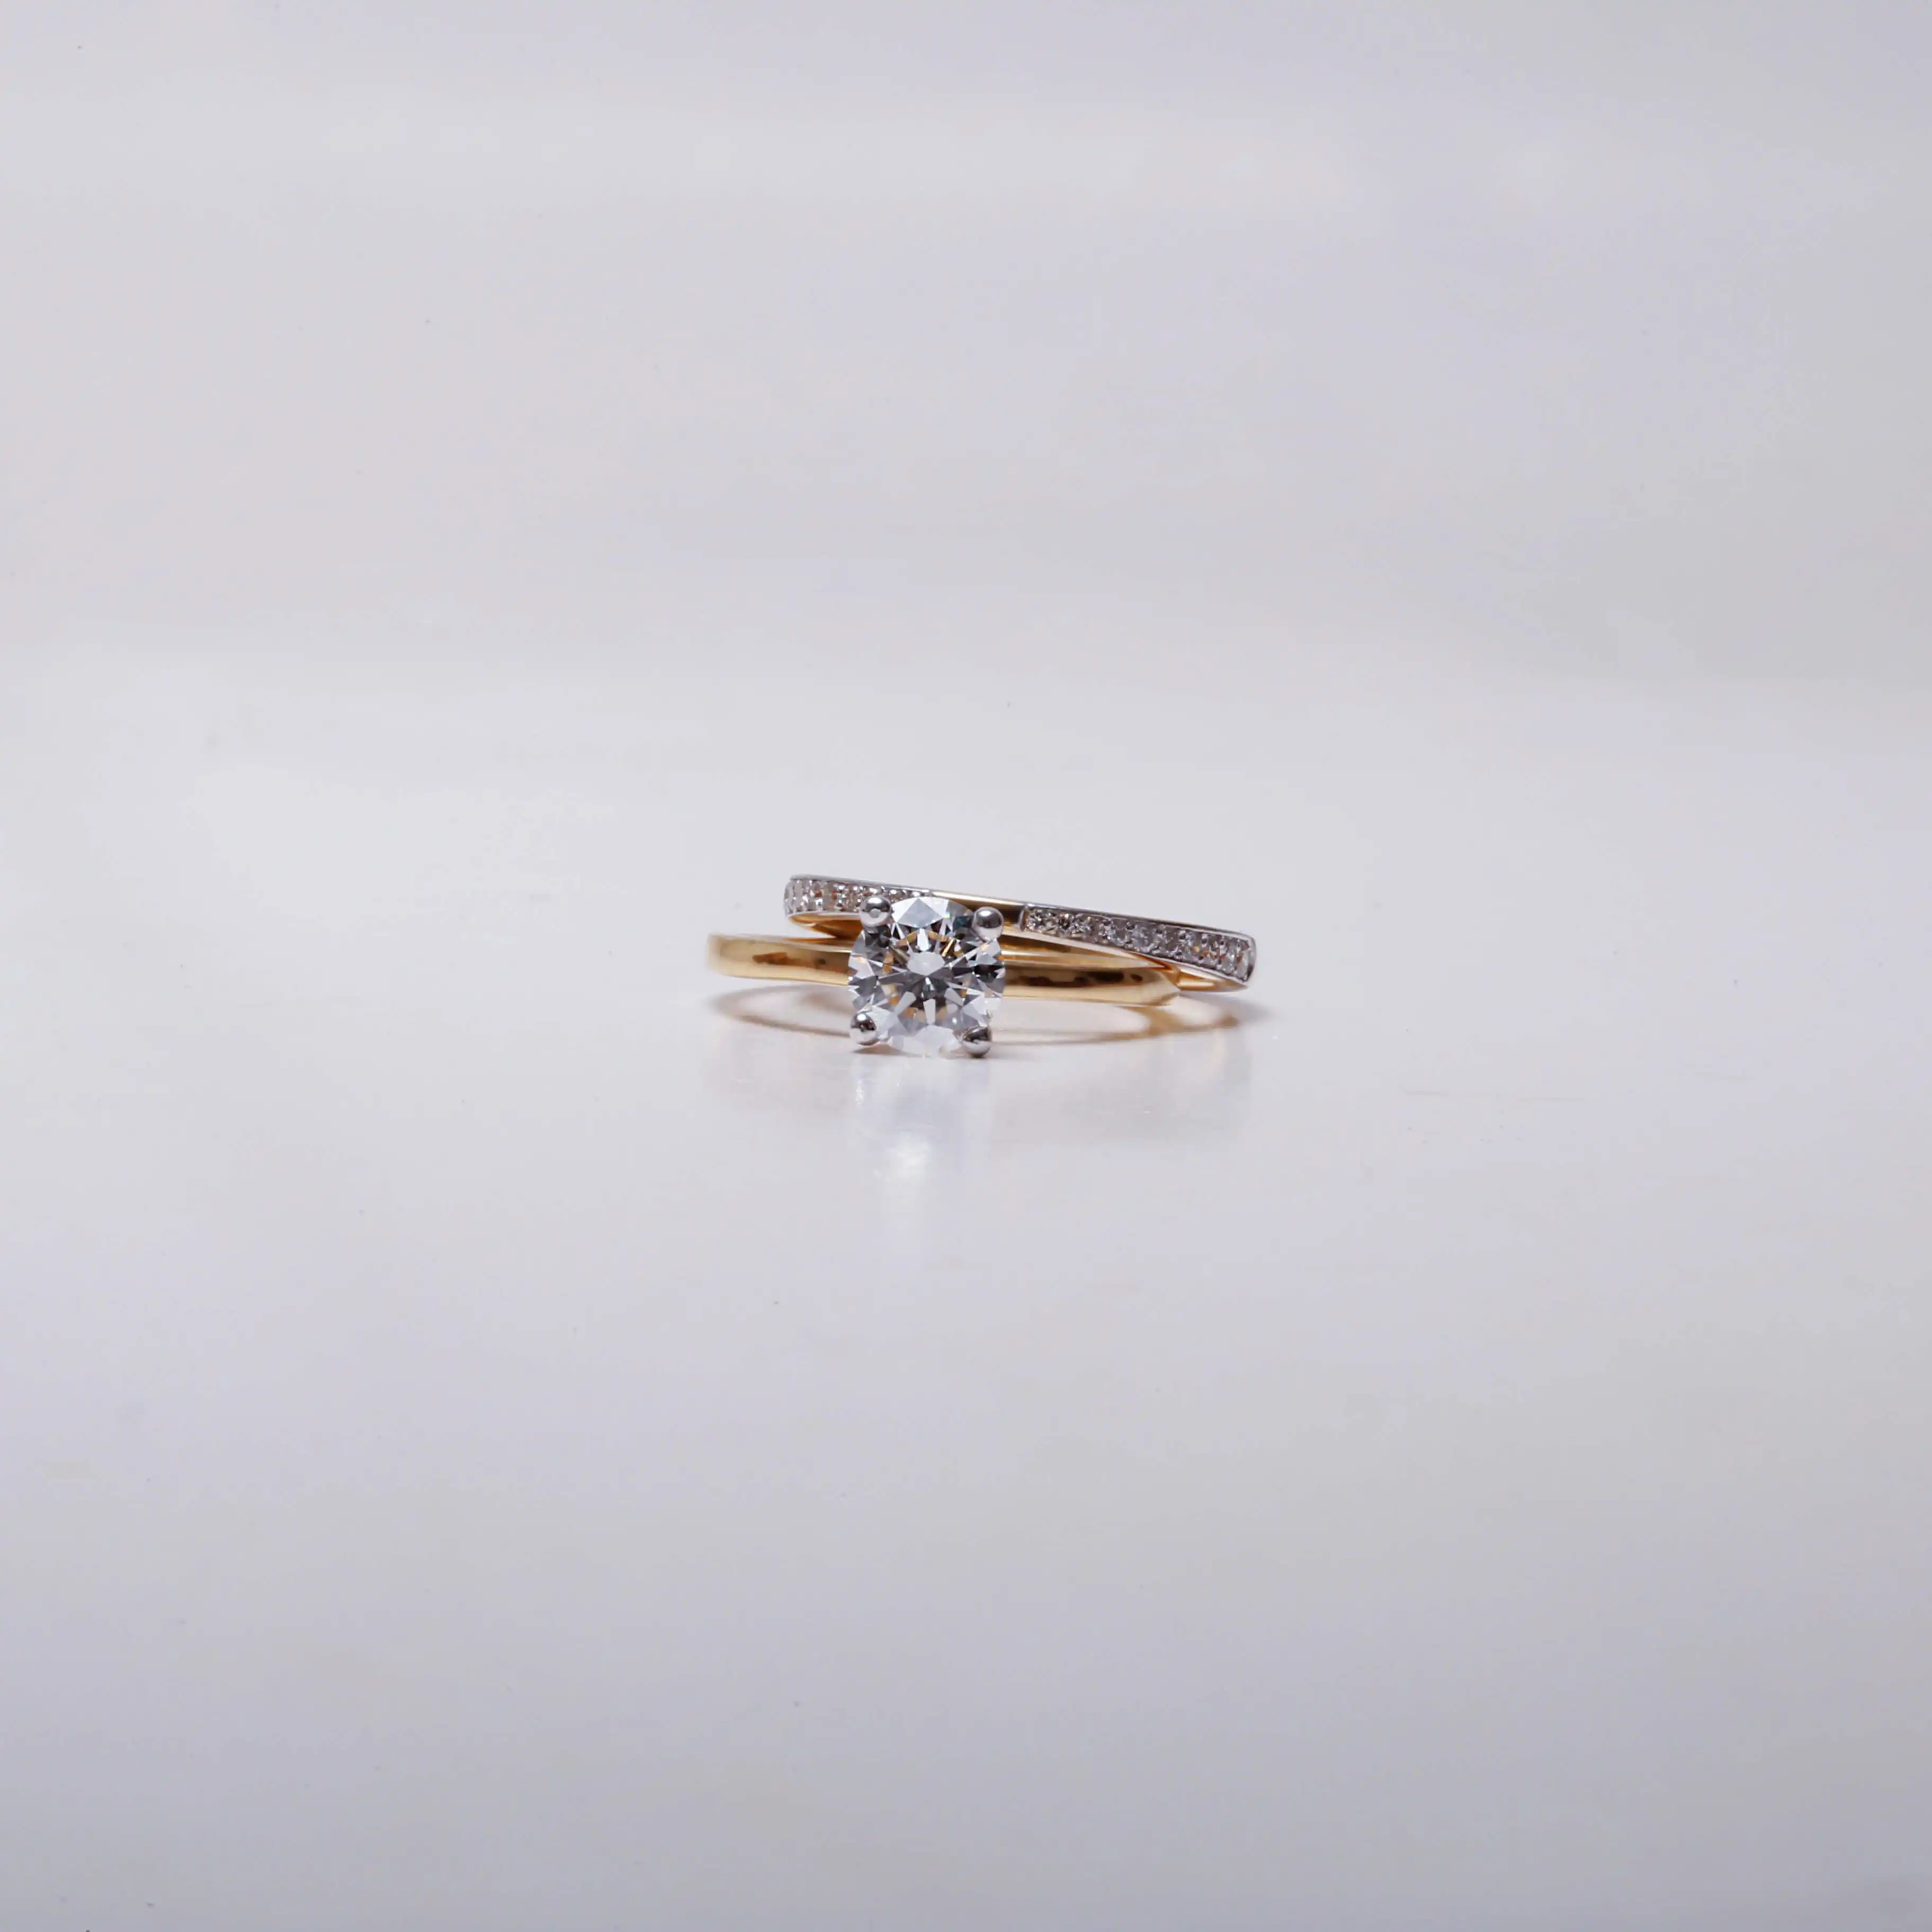 1.00 CT 14KT זהב מוצק בחיתוך עגול מעבדה גדלו טבעת נישואין יהלומים סט לנשים עם טבעות אירוסין יהלומים עגולים קטנטנים